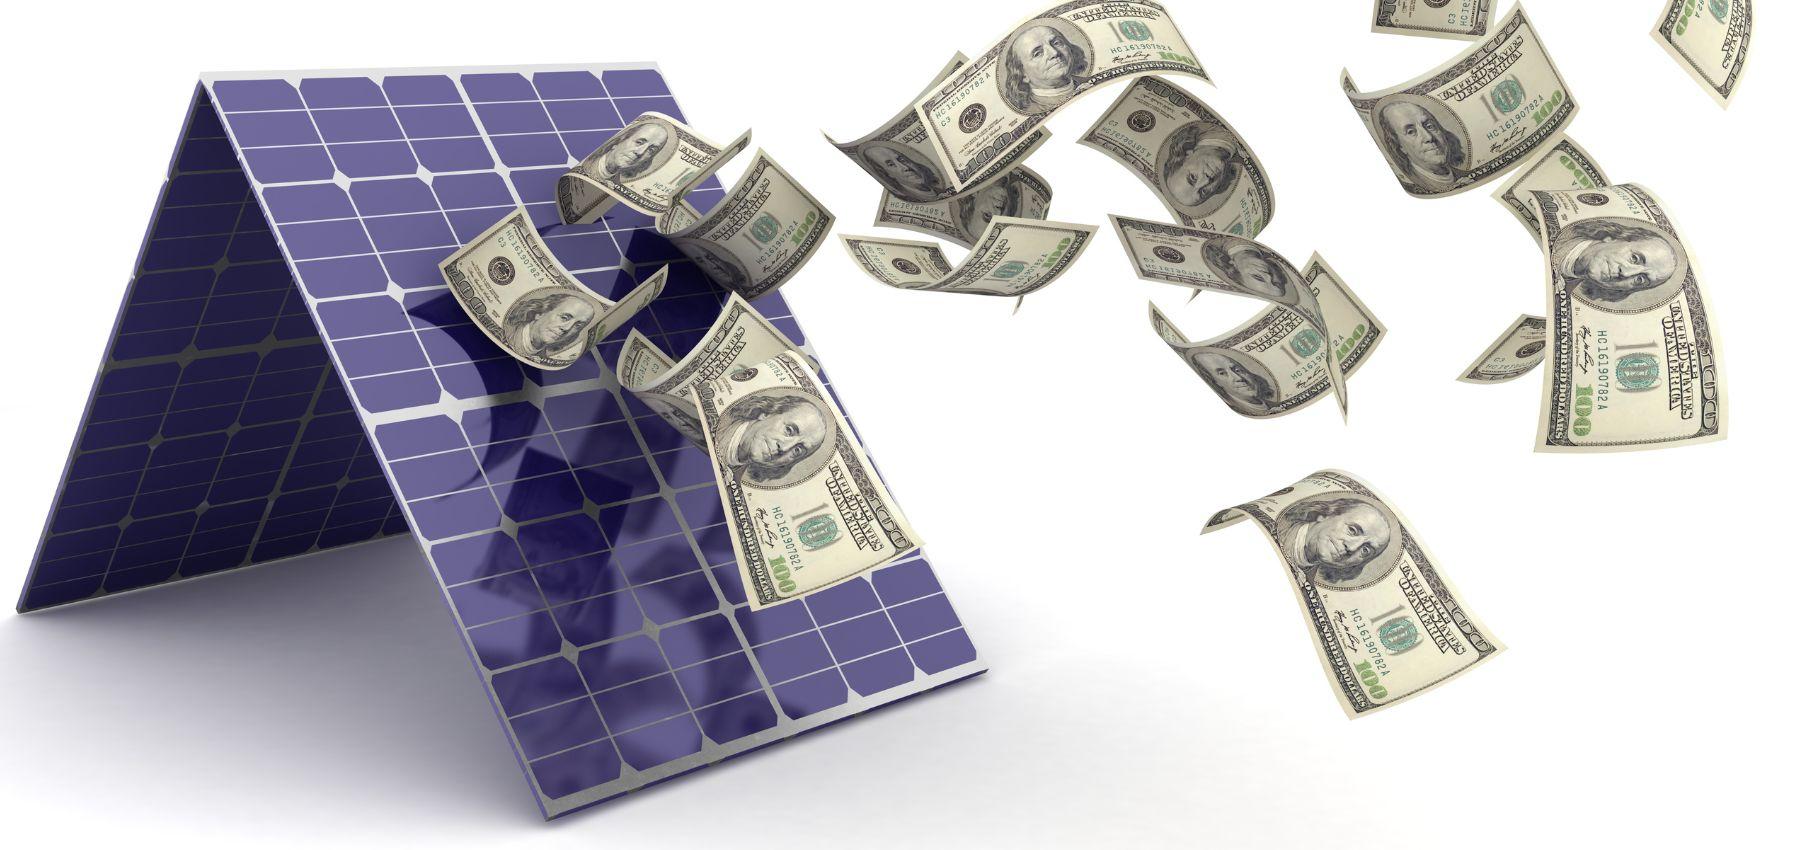 Solar panels with US dollars floating around them